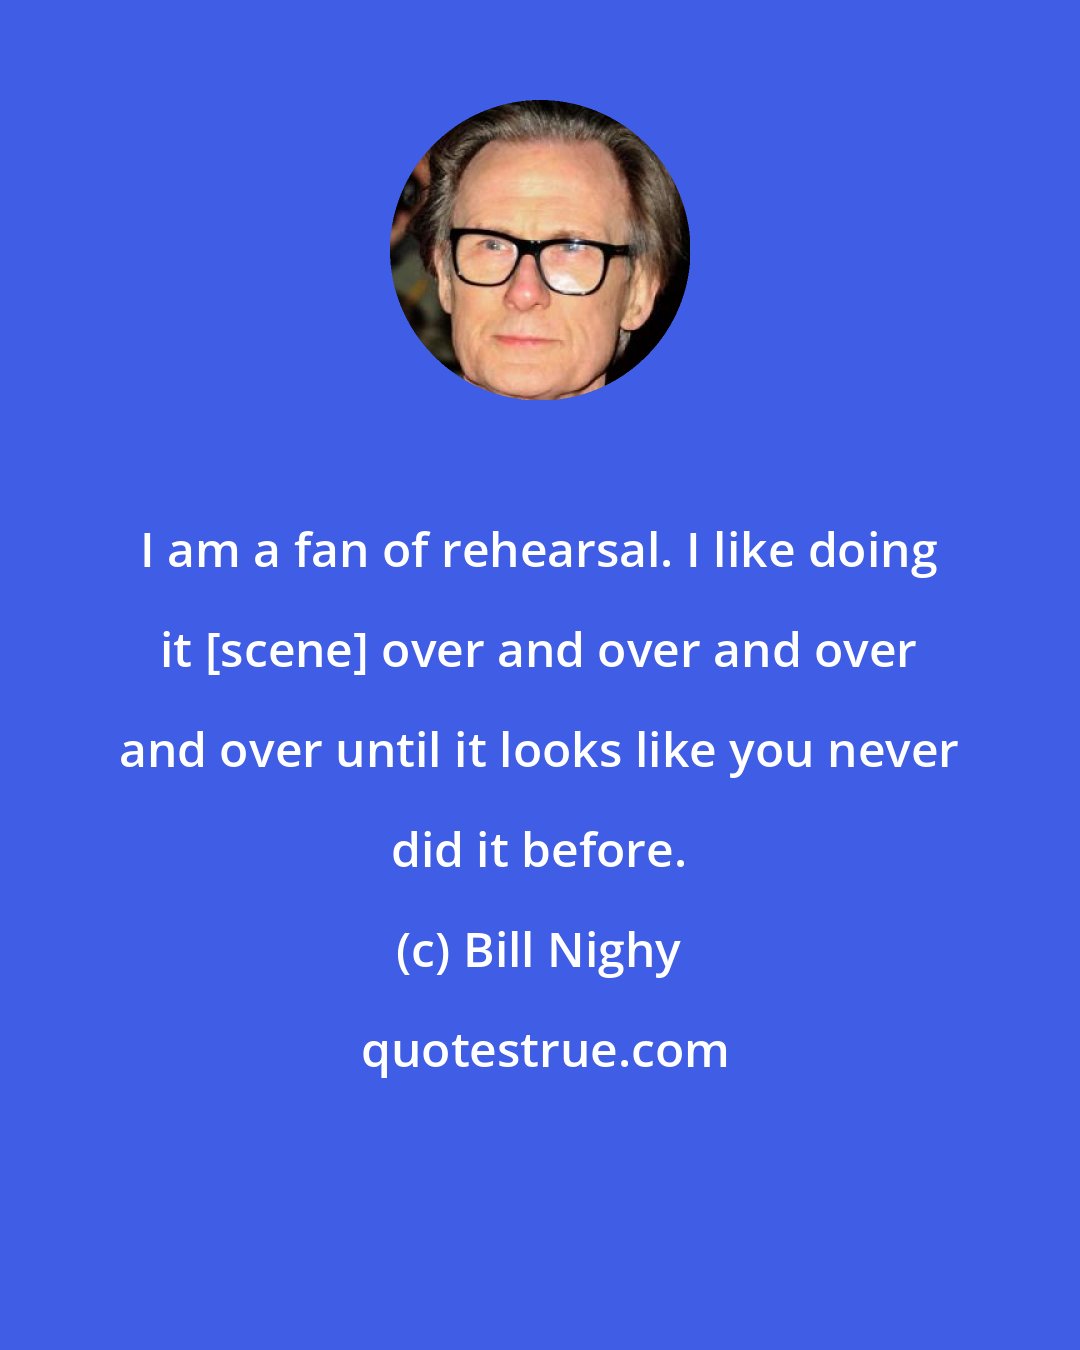 Bill Nighy: I am a fan of rehearsal. I like doing it [scene] over and over and over and over until it looks like you never did it before.